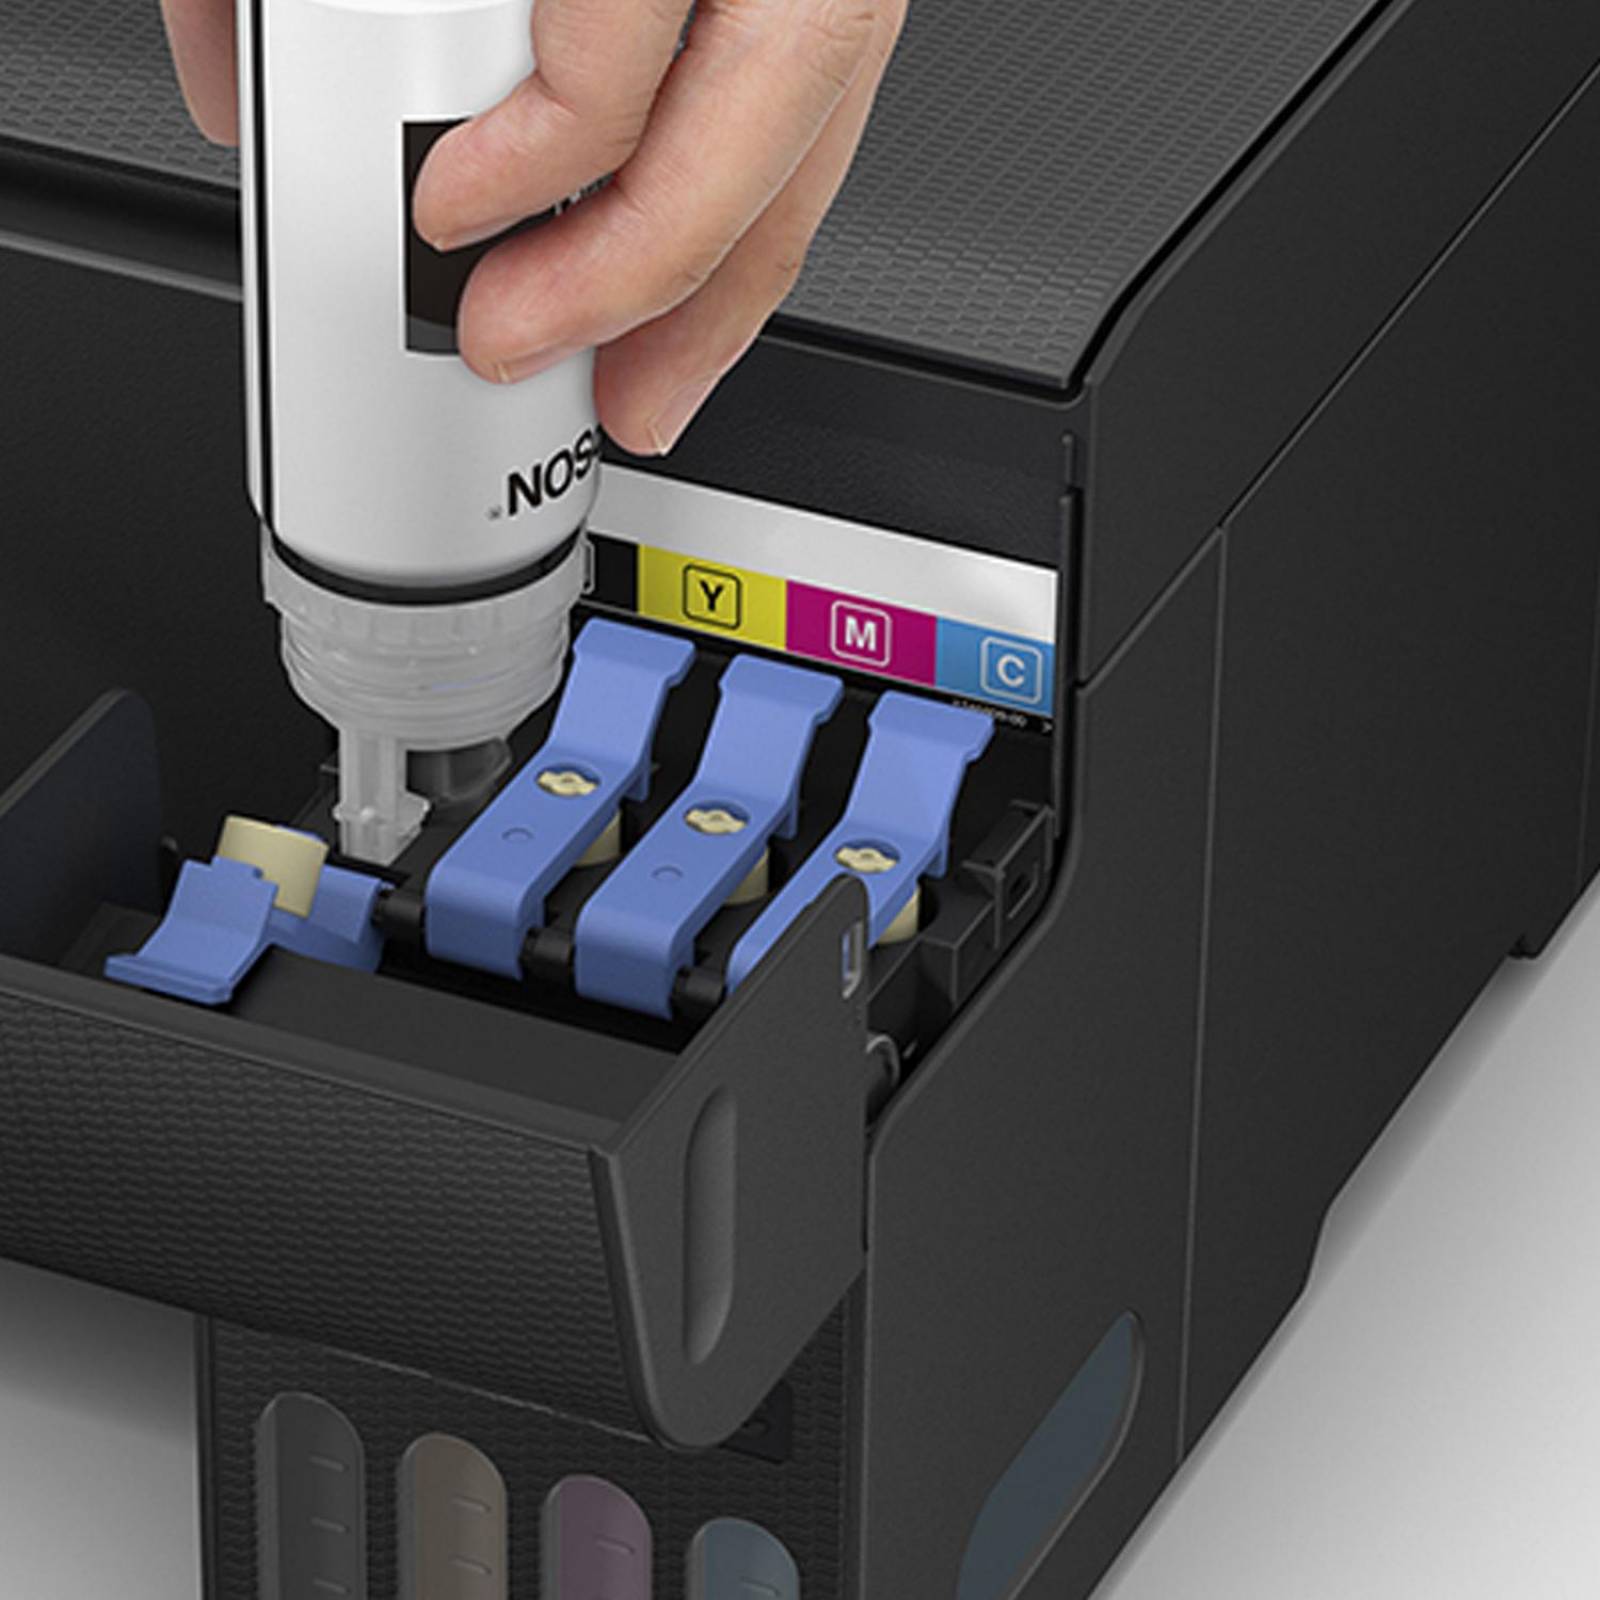 Impresora Multifuncional EPSON EcoTank L3110 Bundle 5 Tintas 